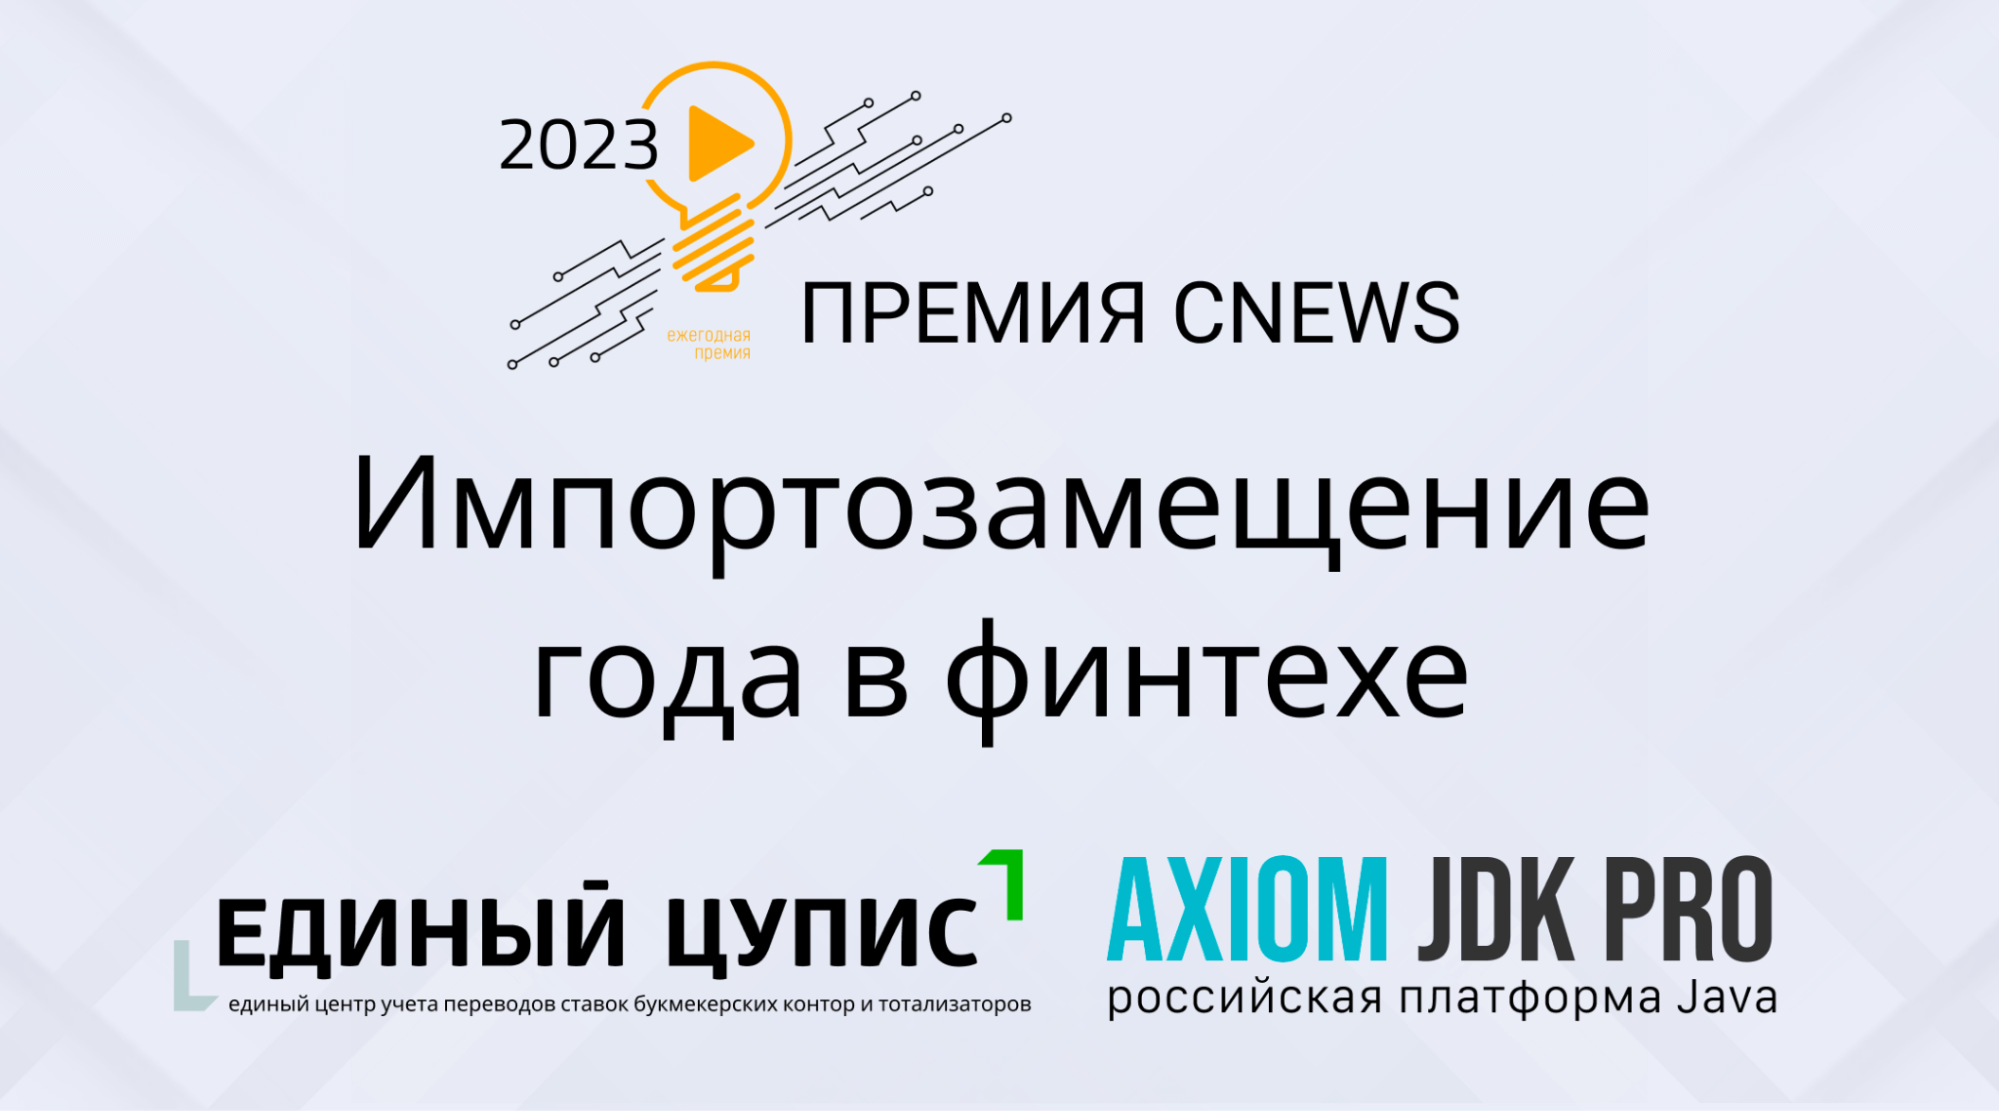 Премия Cnews за проект перехода ЕДИНОГО ЦУПИС на Axiom JDK Pro